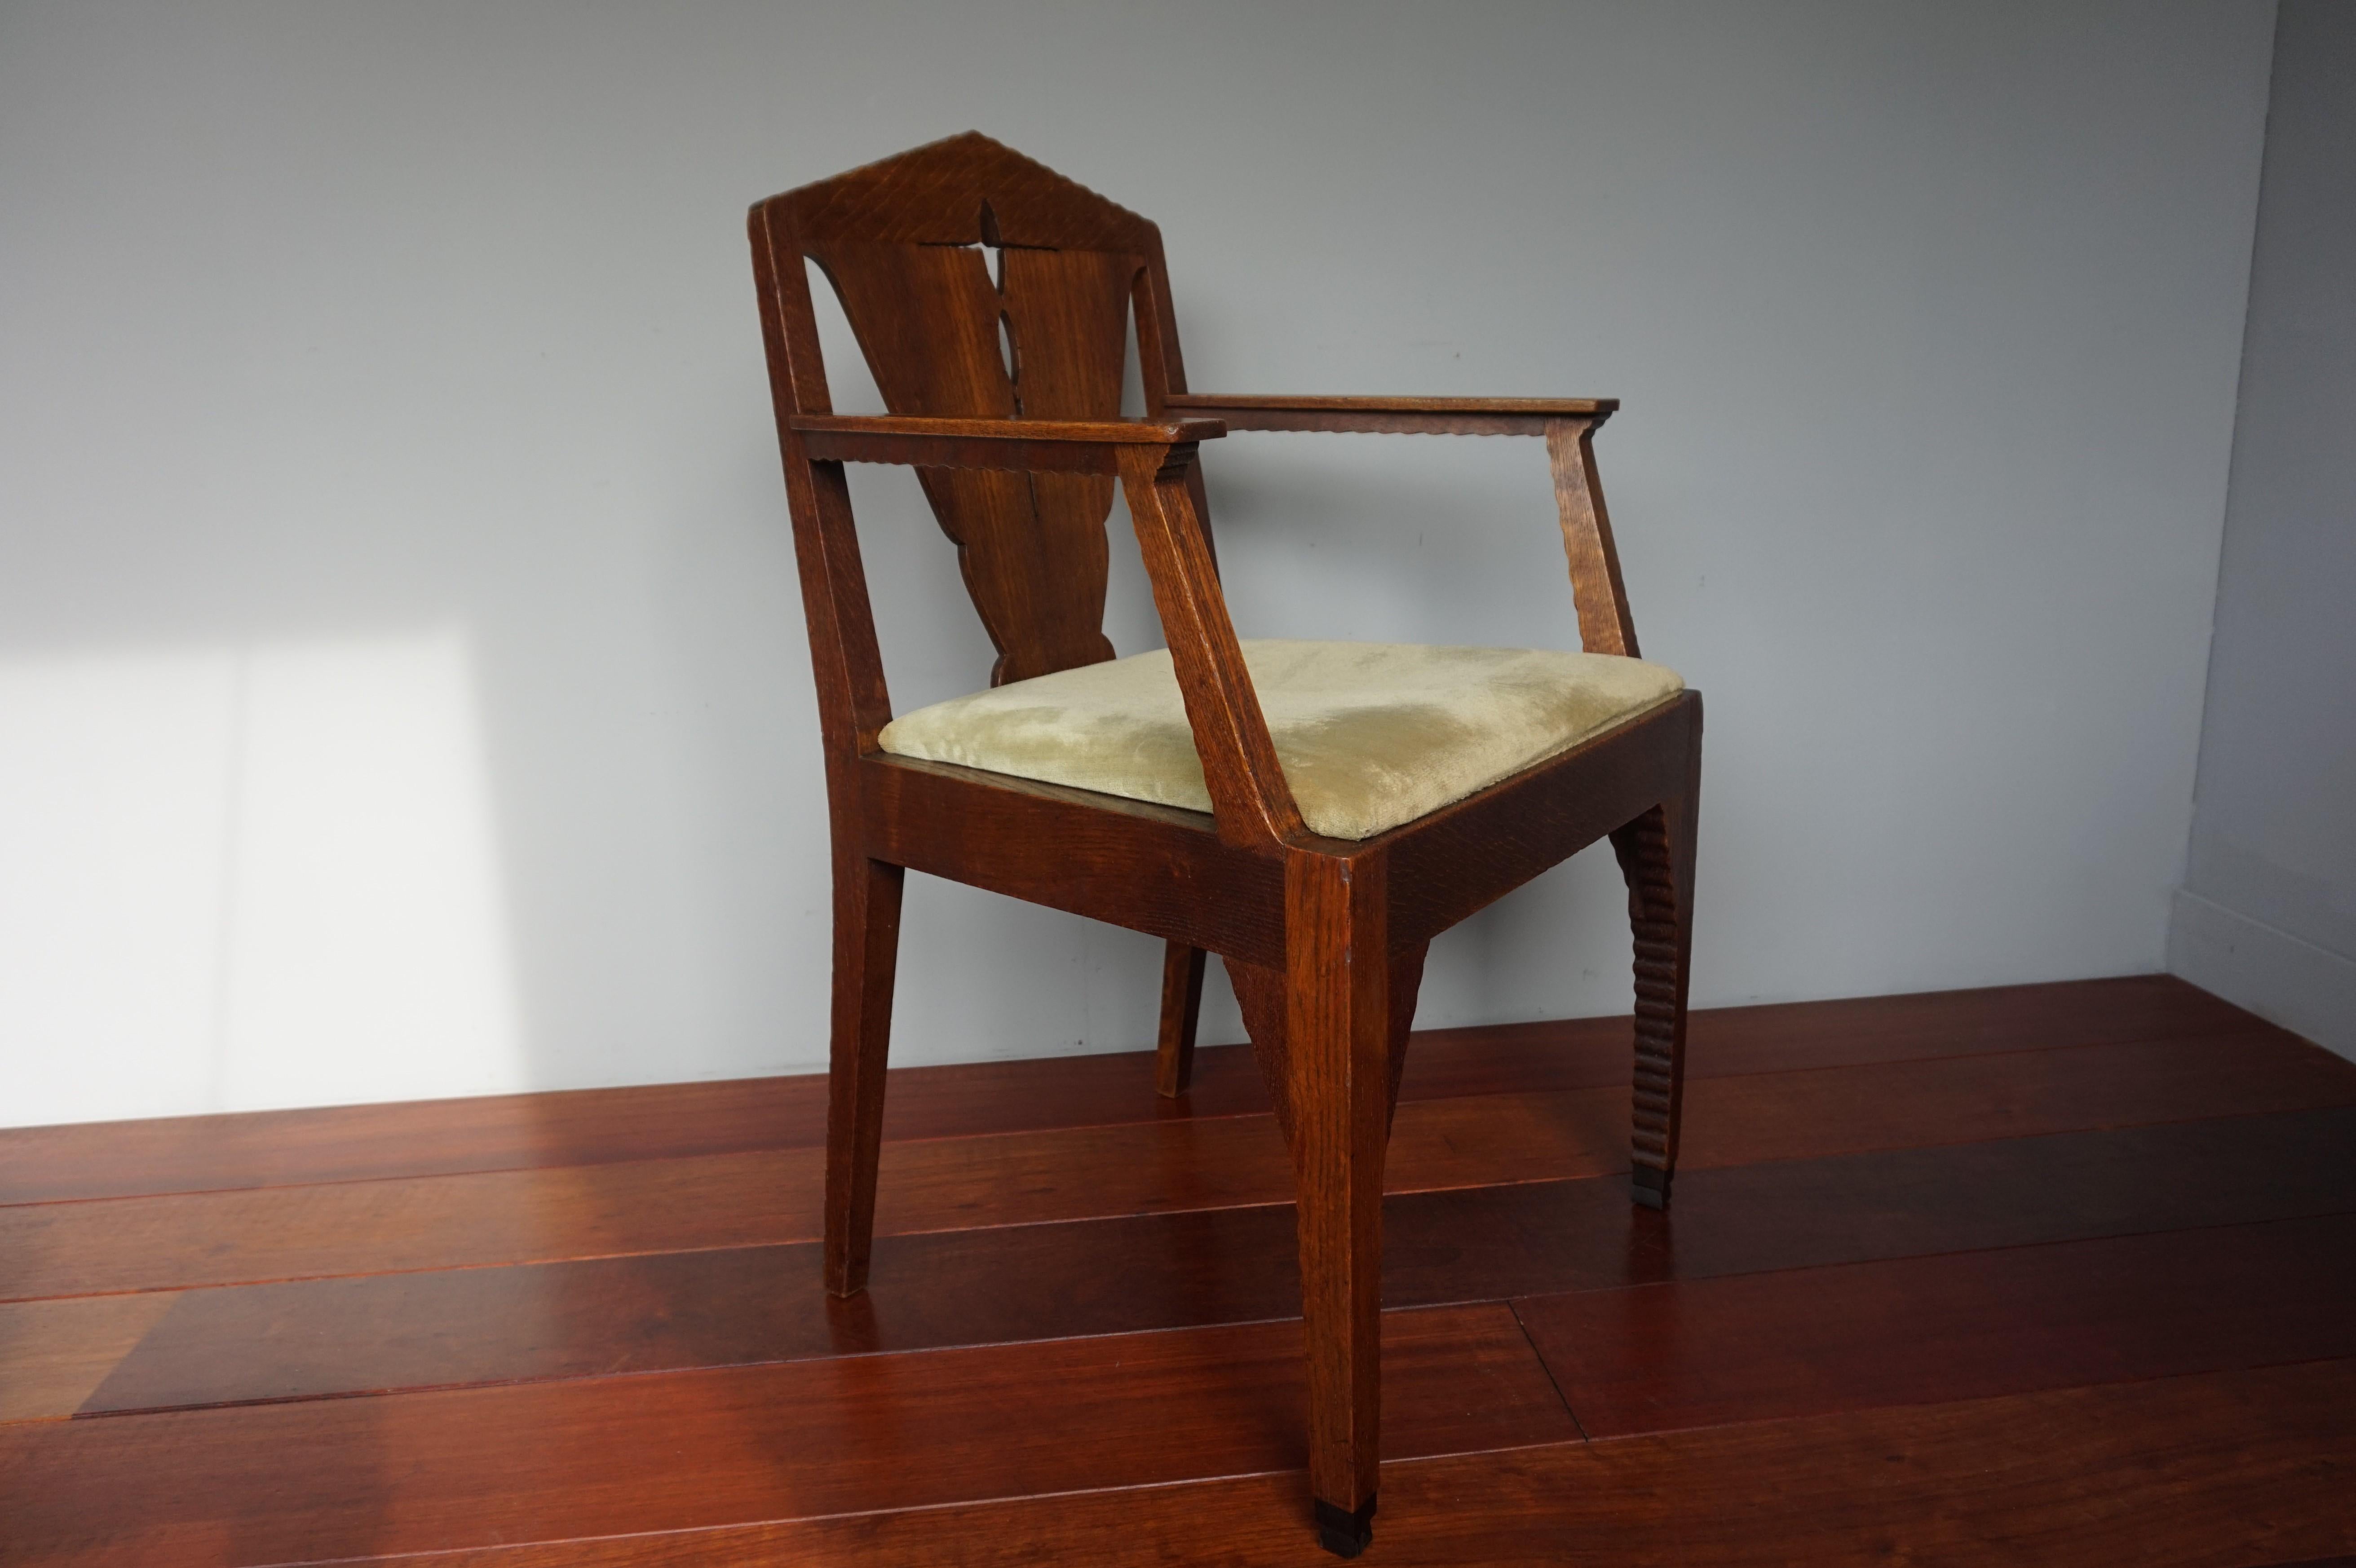 Brilliant Design Dutch Arts & Crafts Oak Desk Chair w. Original Upholstery 1910s For Sale 7